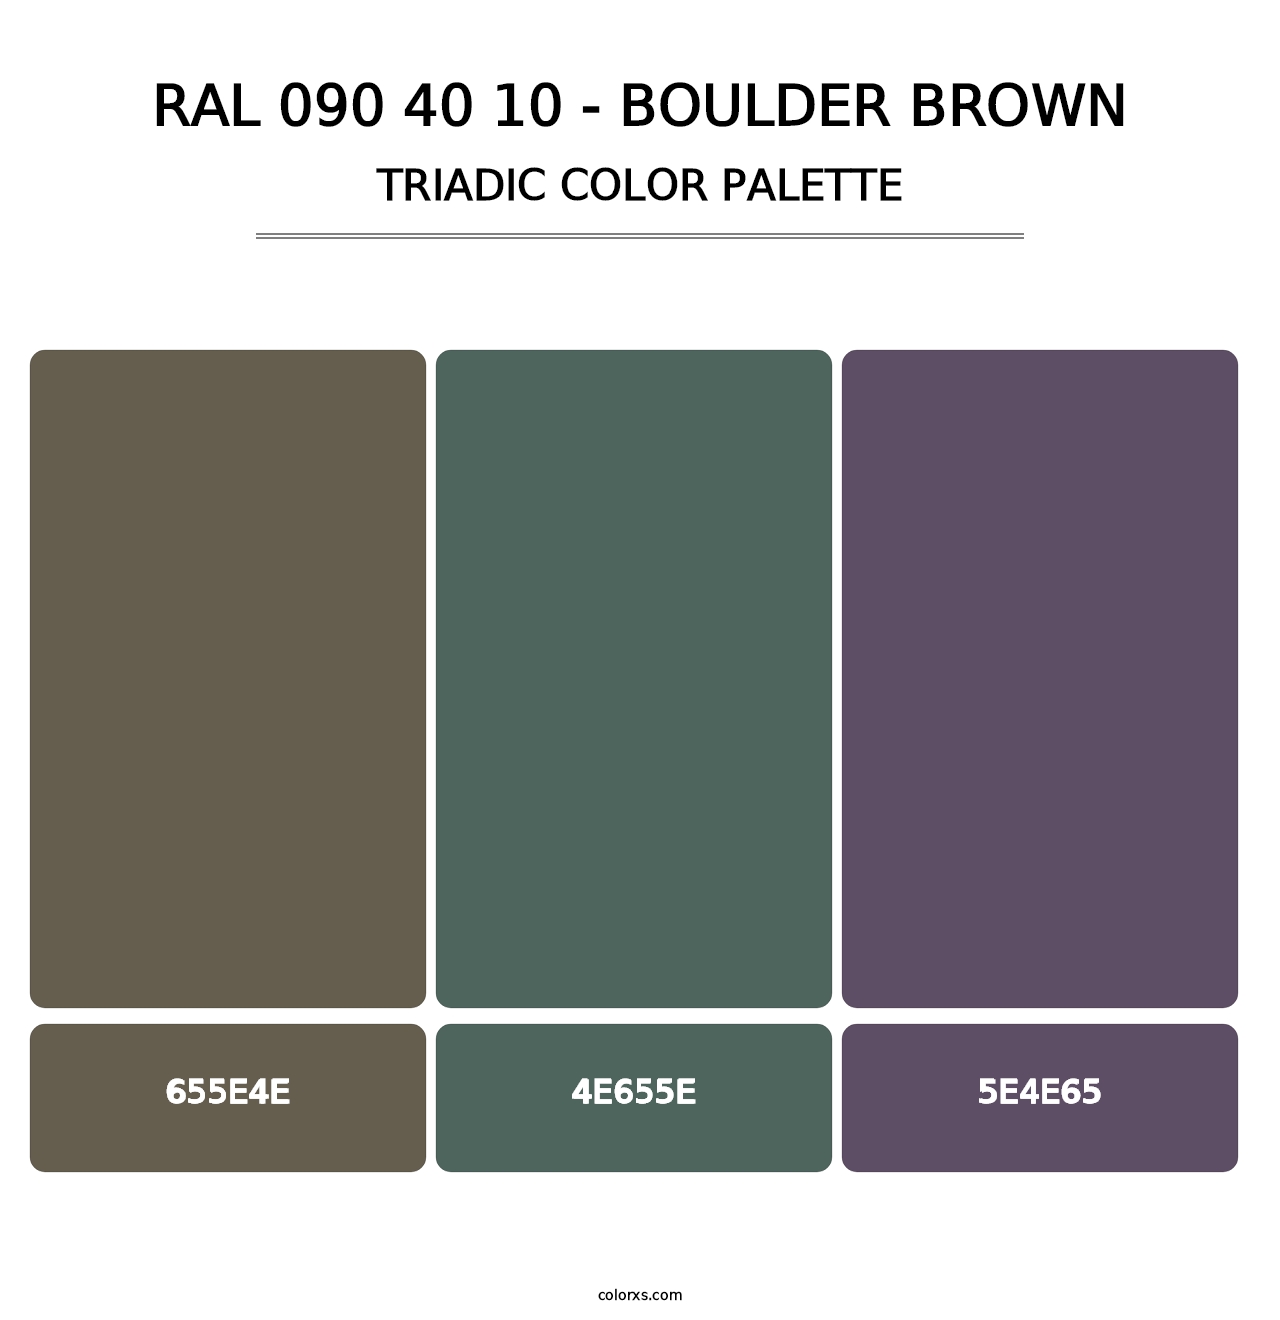 RAL 090 40 10 - Boulder Brown - Triadic Color Palette